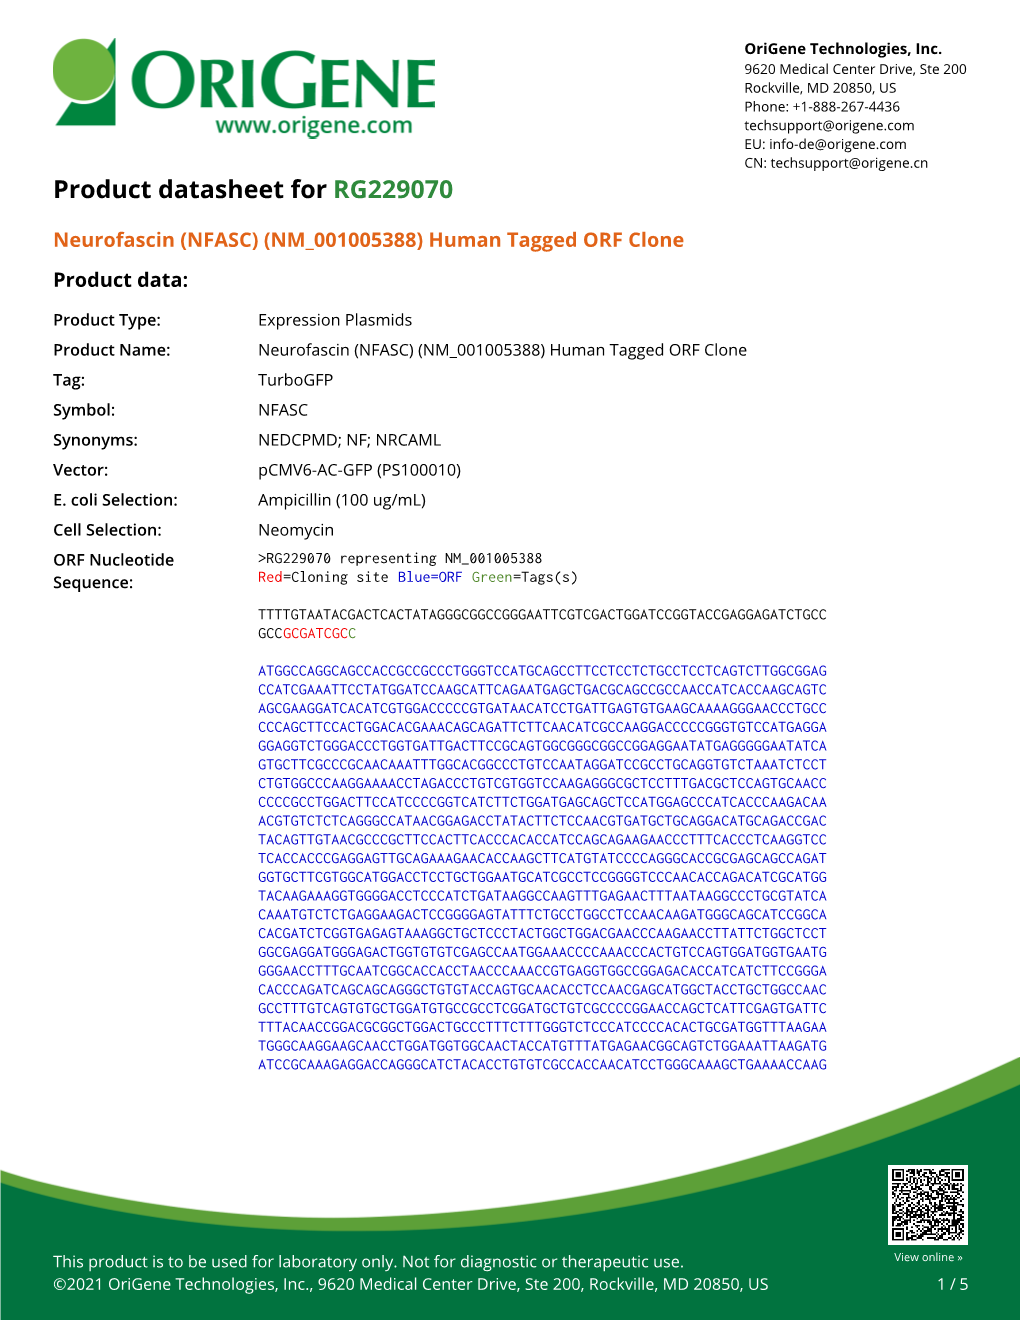 Neurofascin (NFASC) (NM 001005388) Human Tagged ORF Clone Product Data